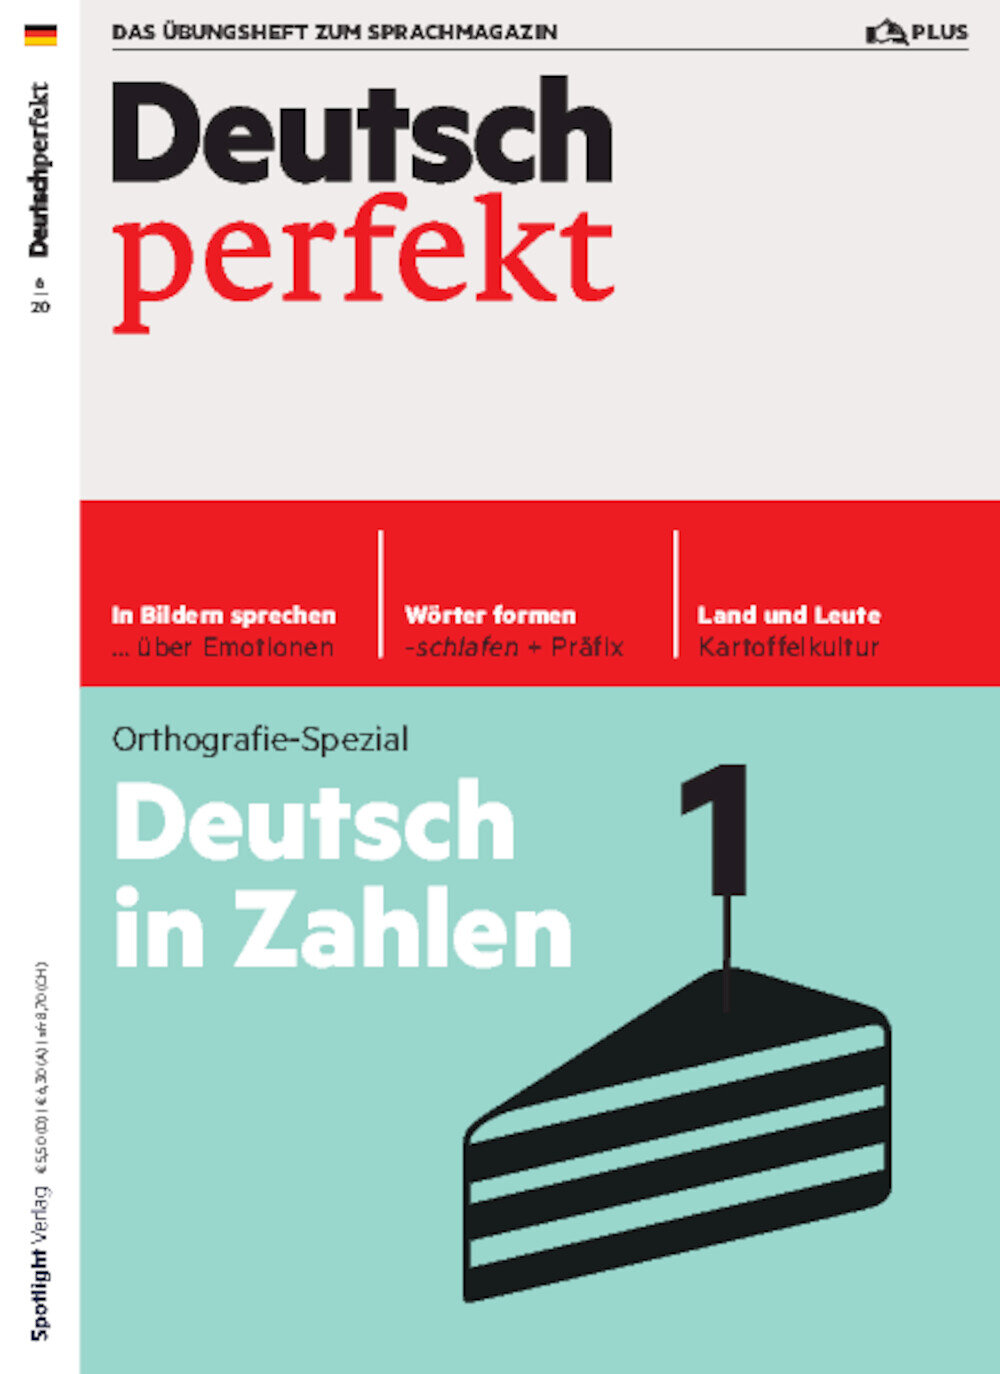 Deutsch perfekt Übungsheft Digital 06/2020